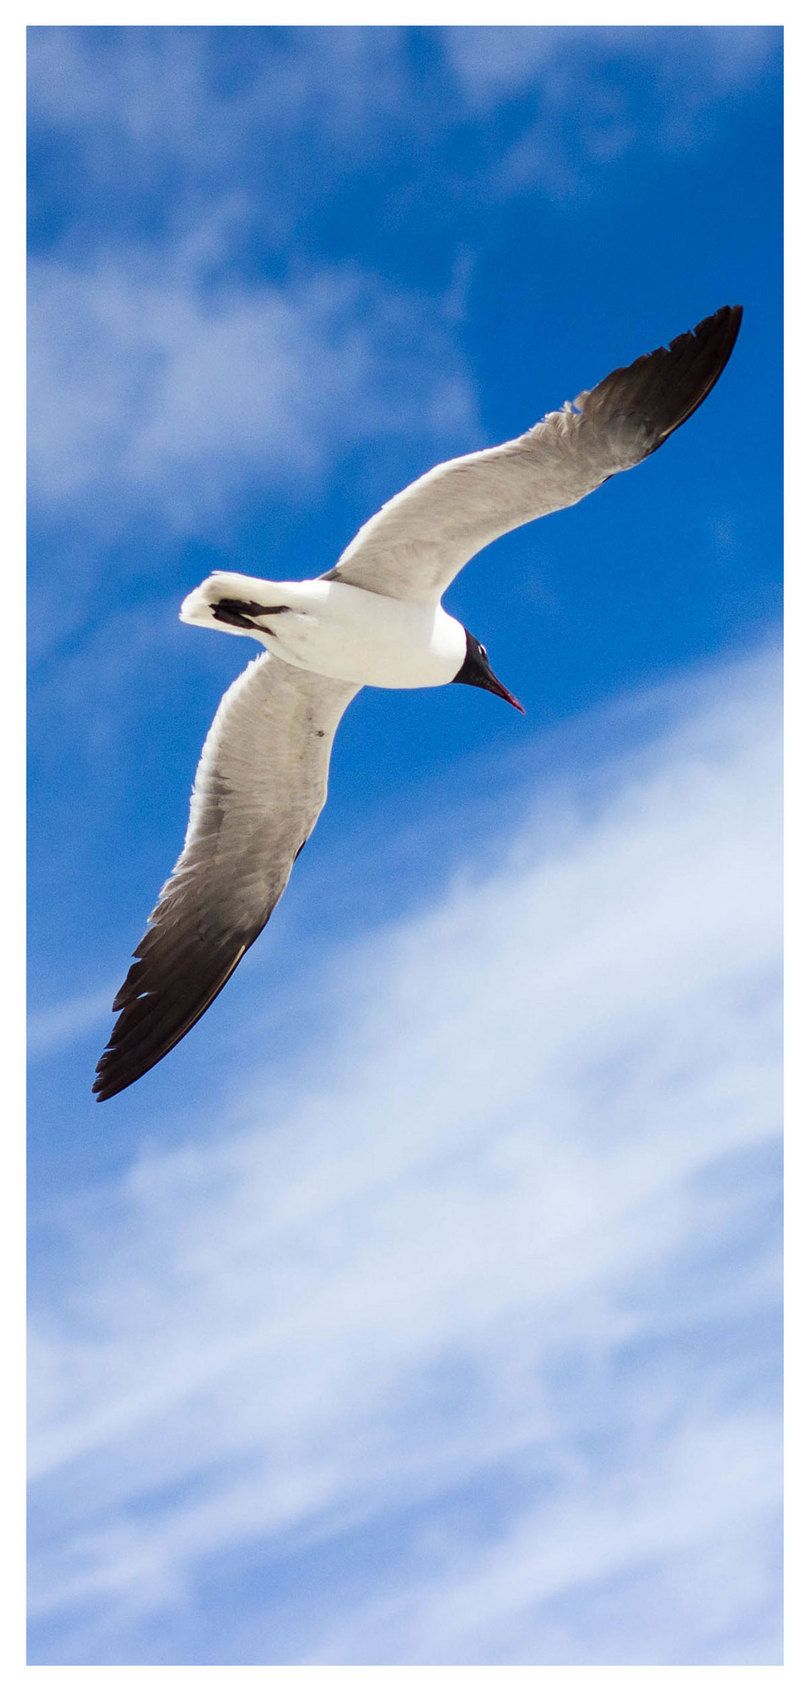 flying bird mobile wallpaper background image free download